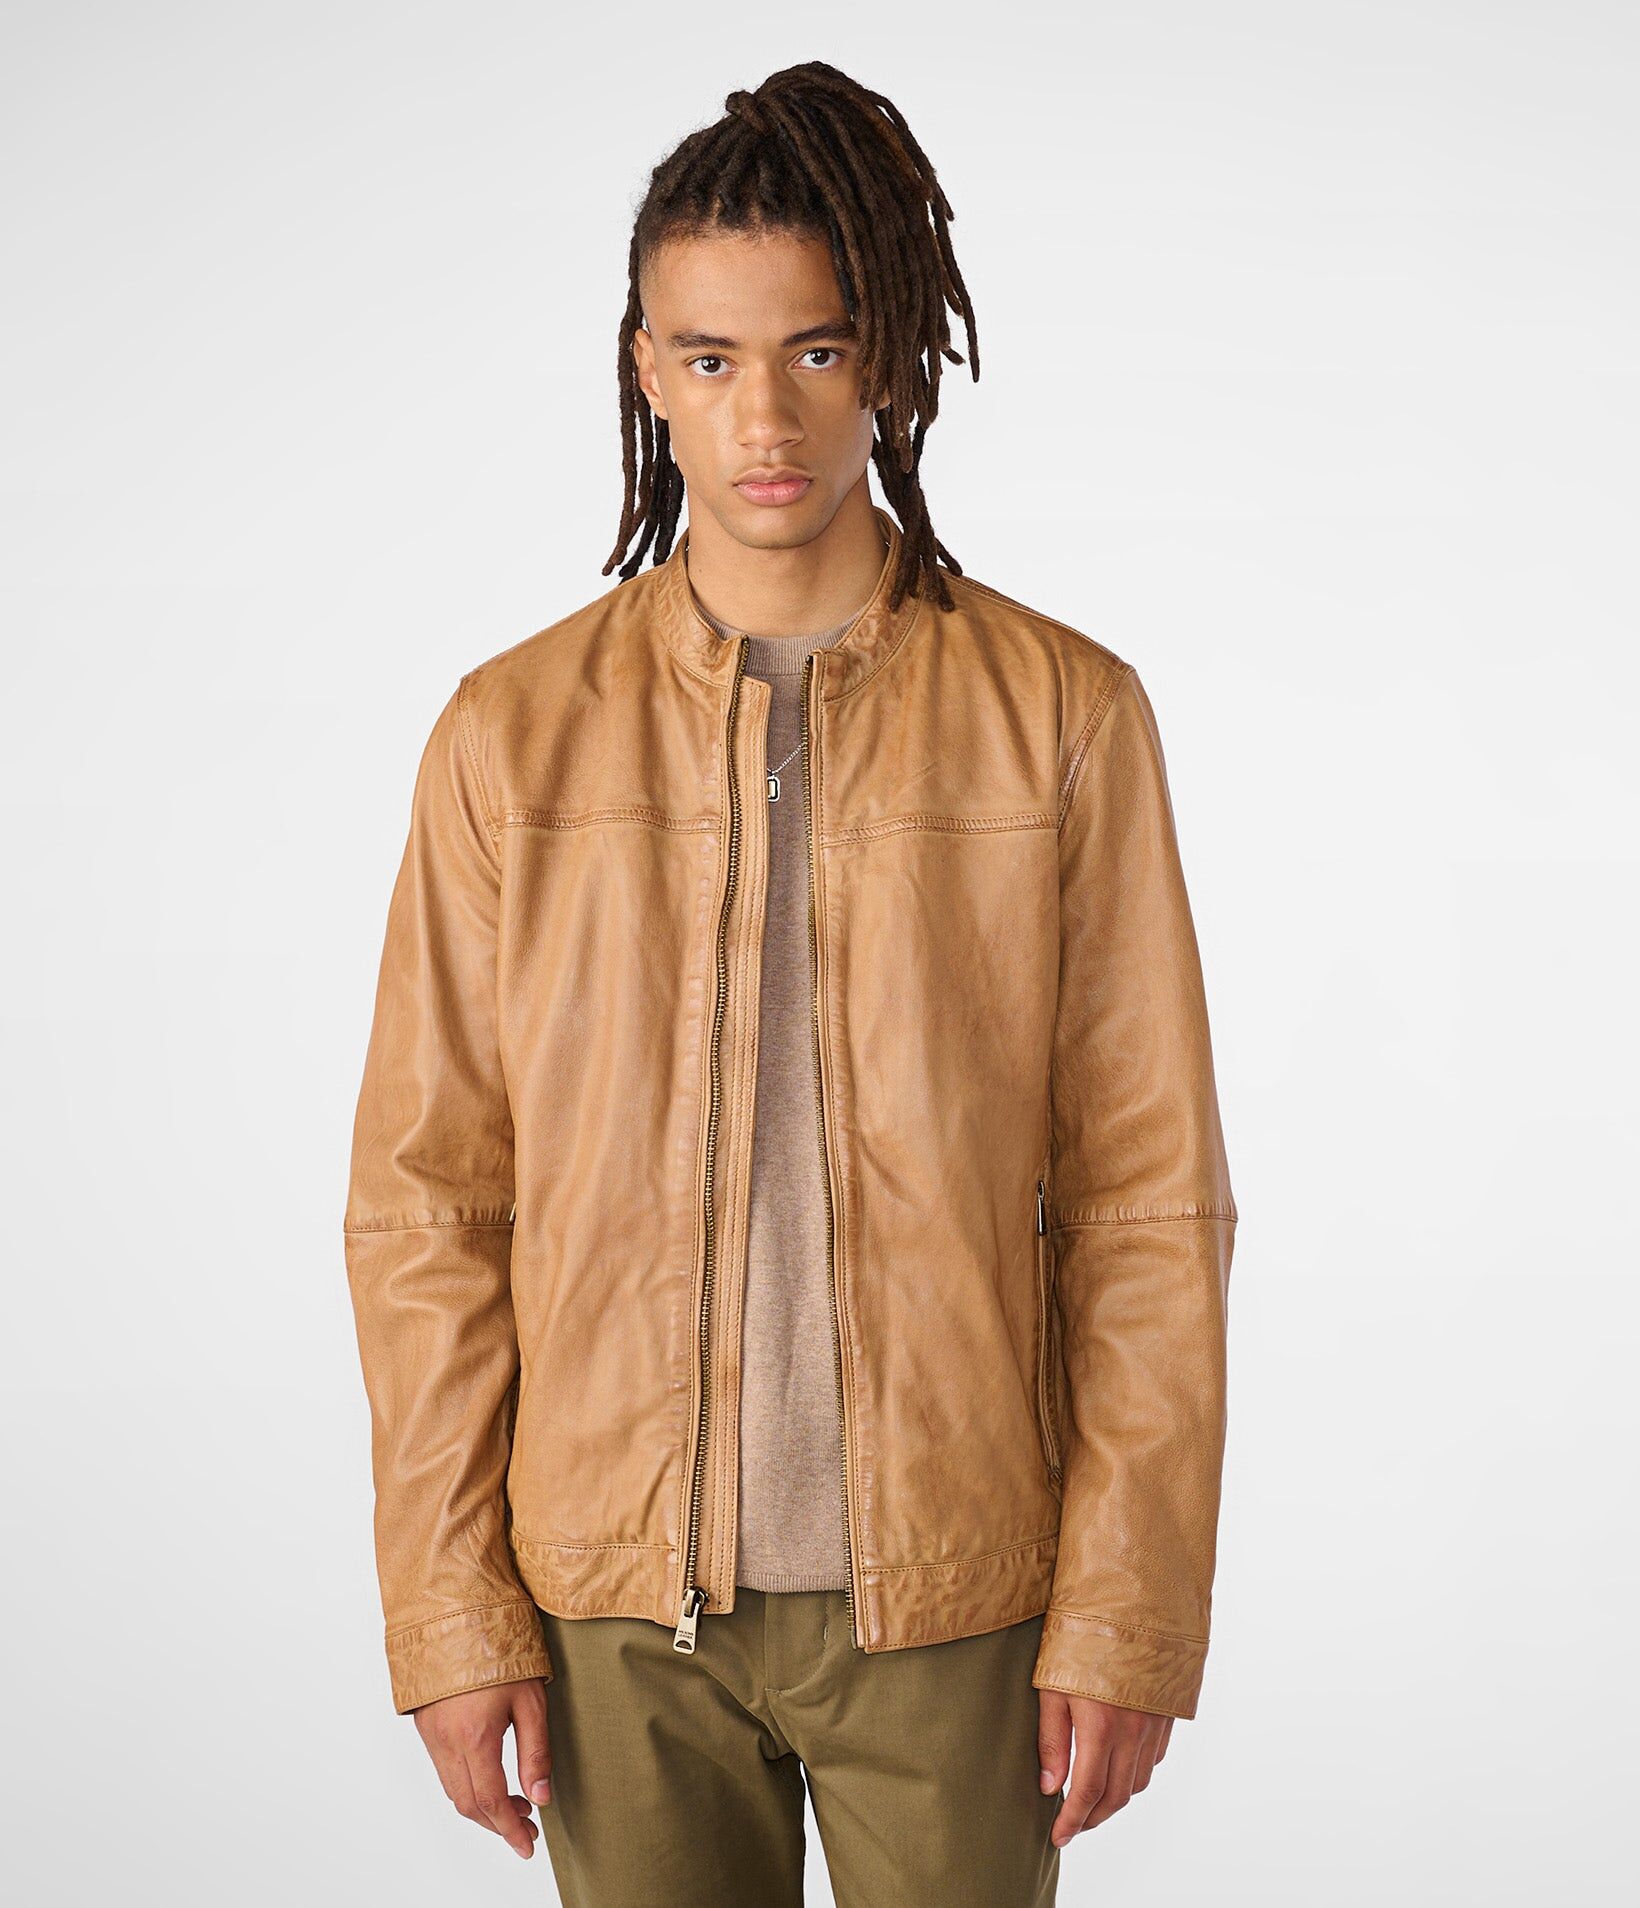 Wilsons Leather   Men's Justin Genuine Leather Jacket   Camel   Medium